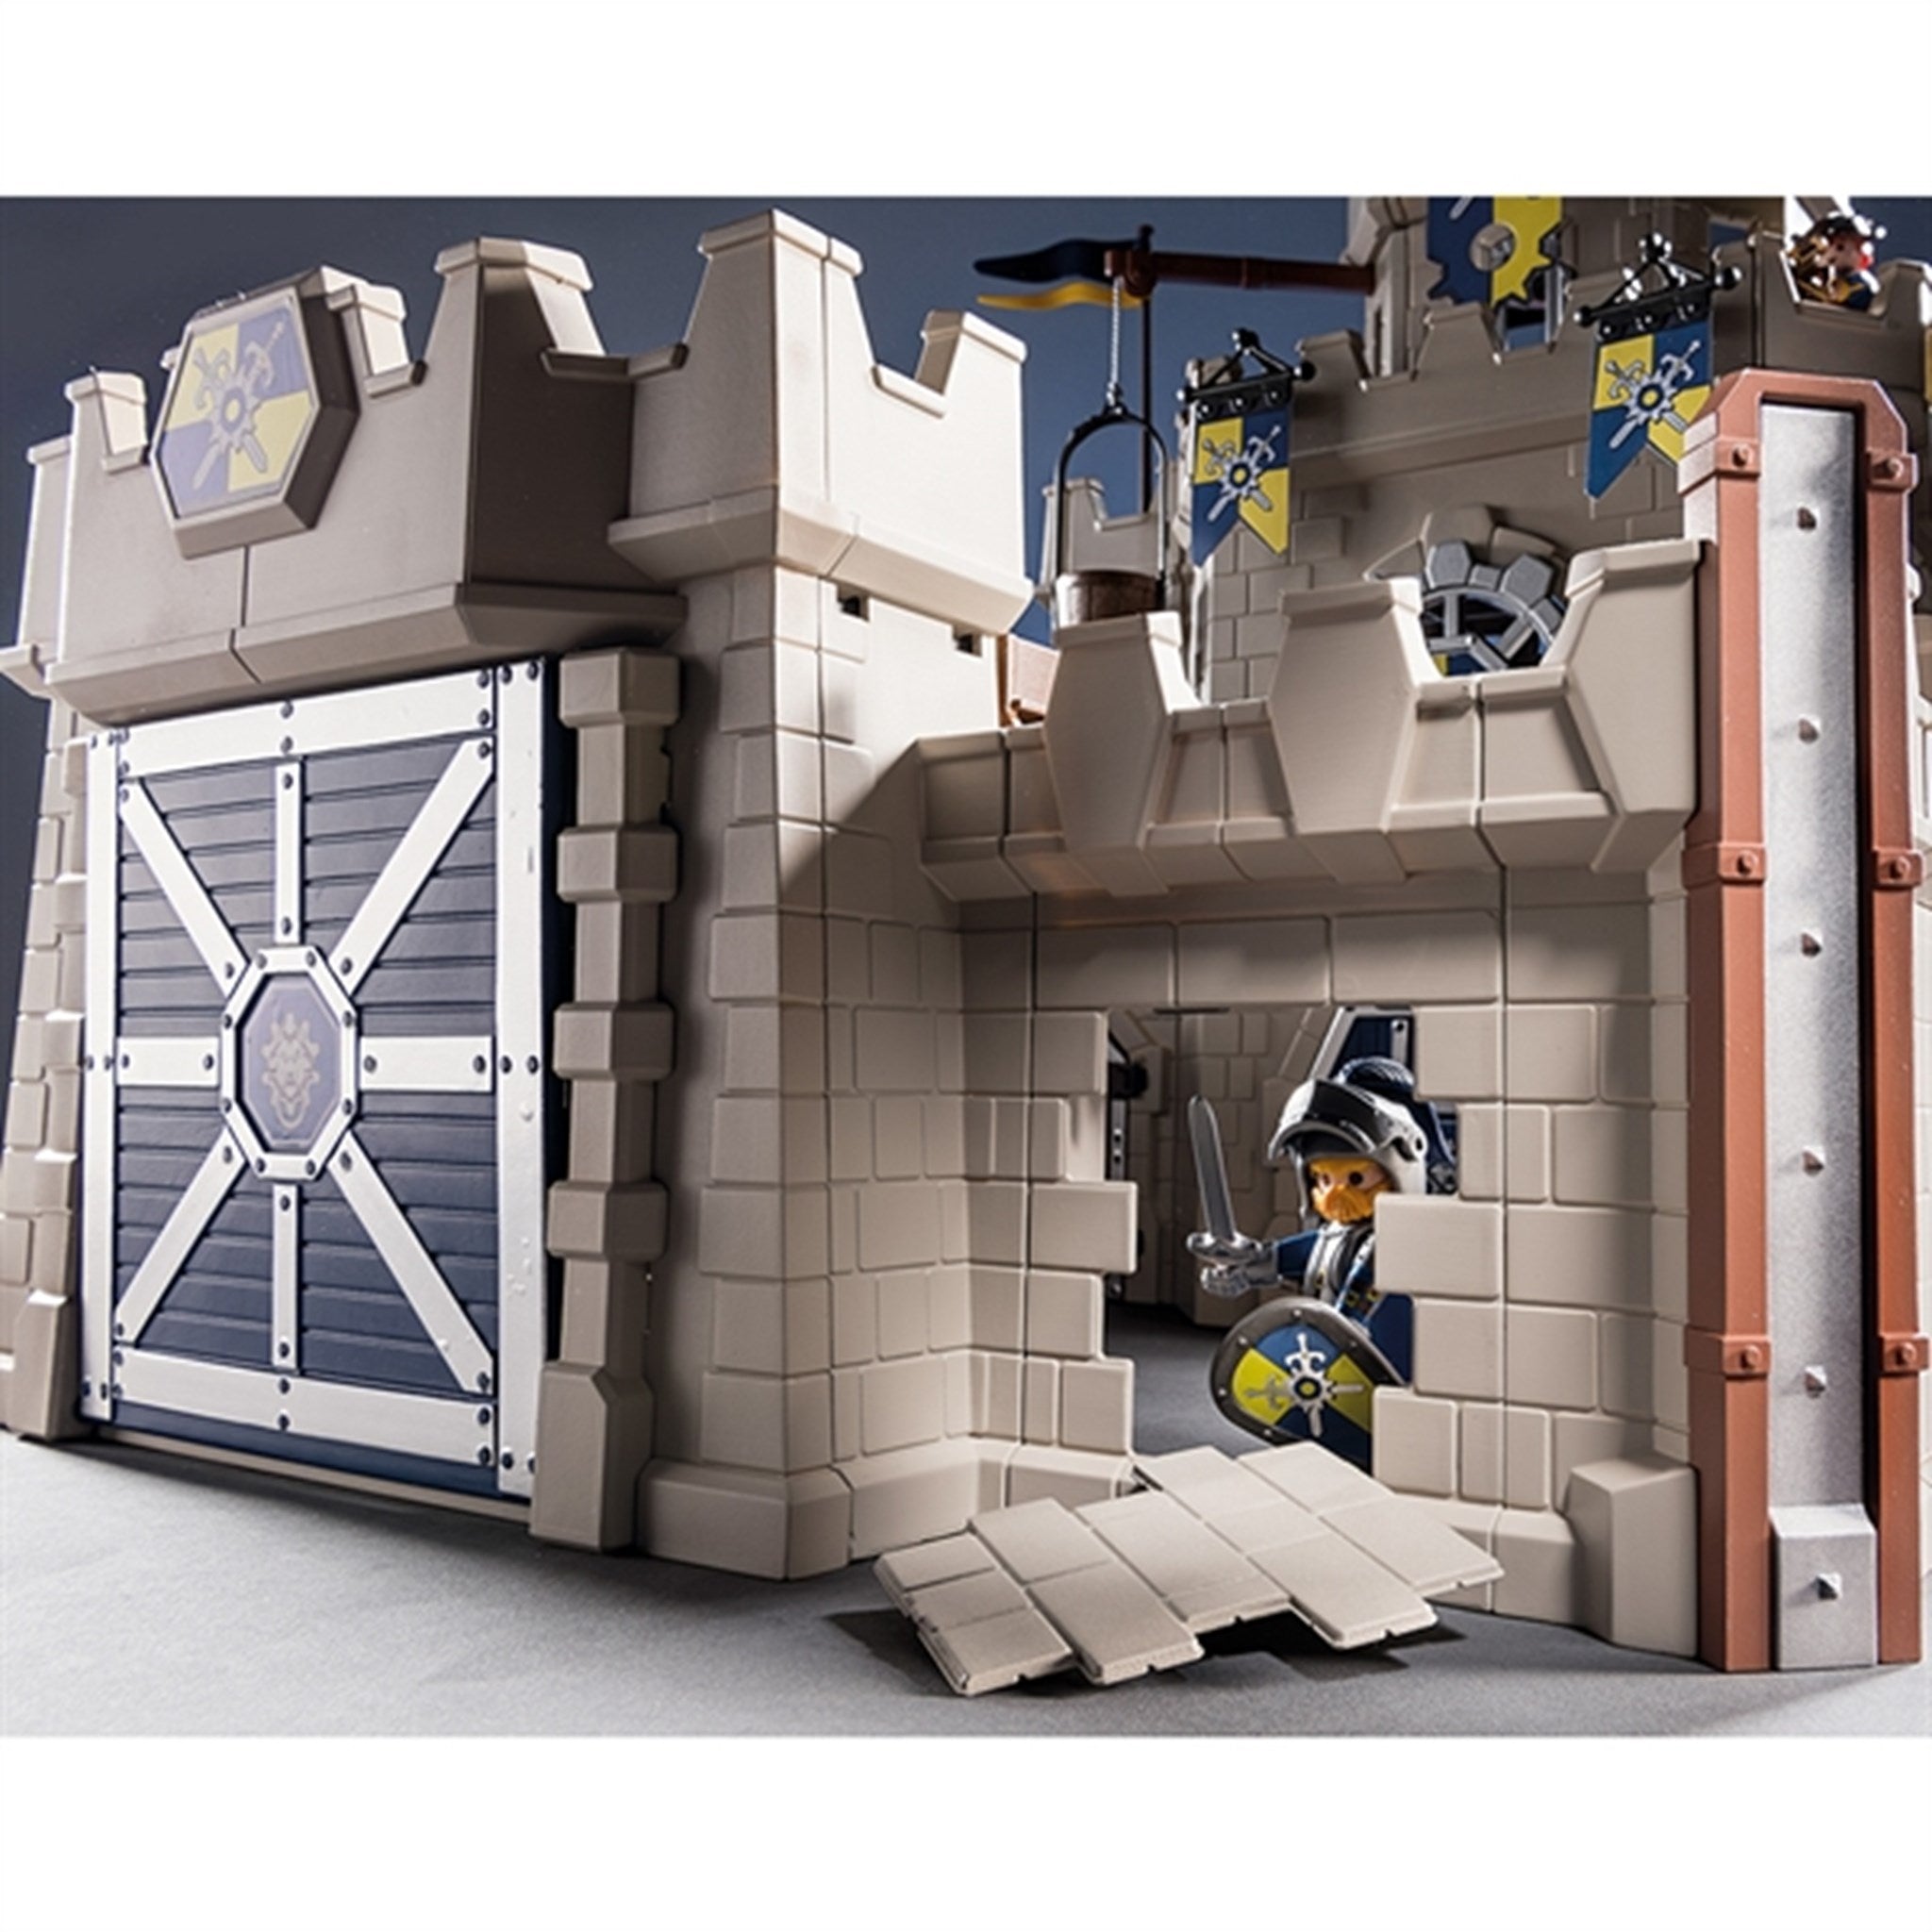 Playmobil® Novelmore - Grand Castle of Novelmore 5